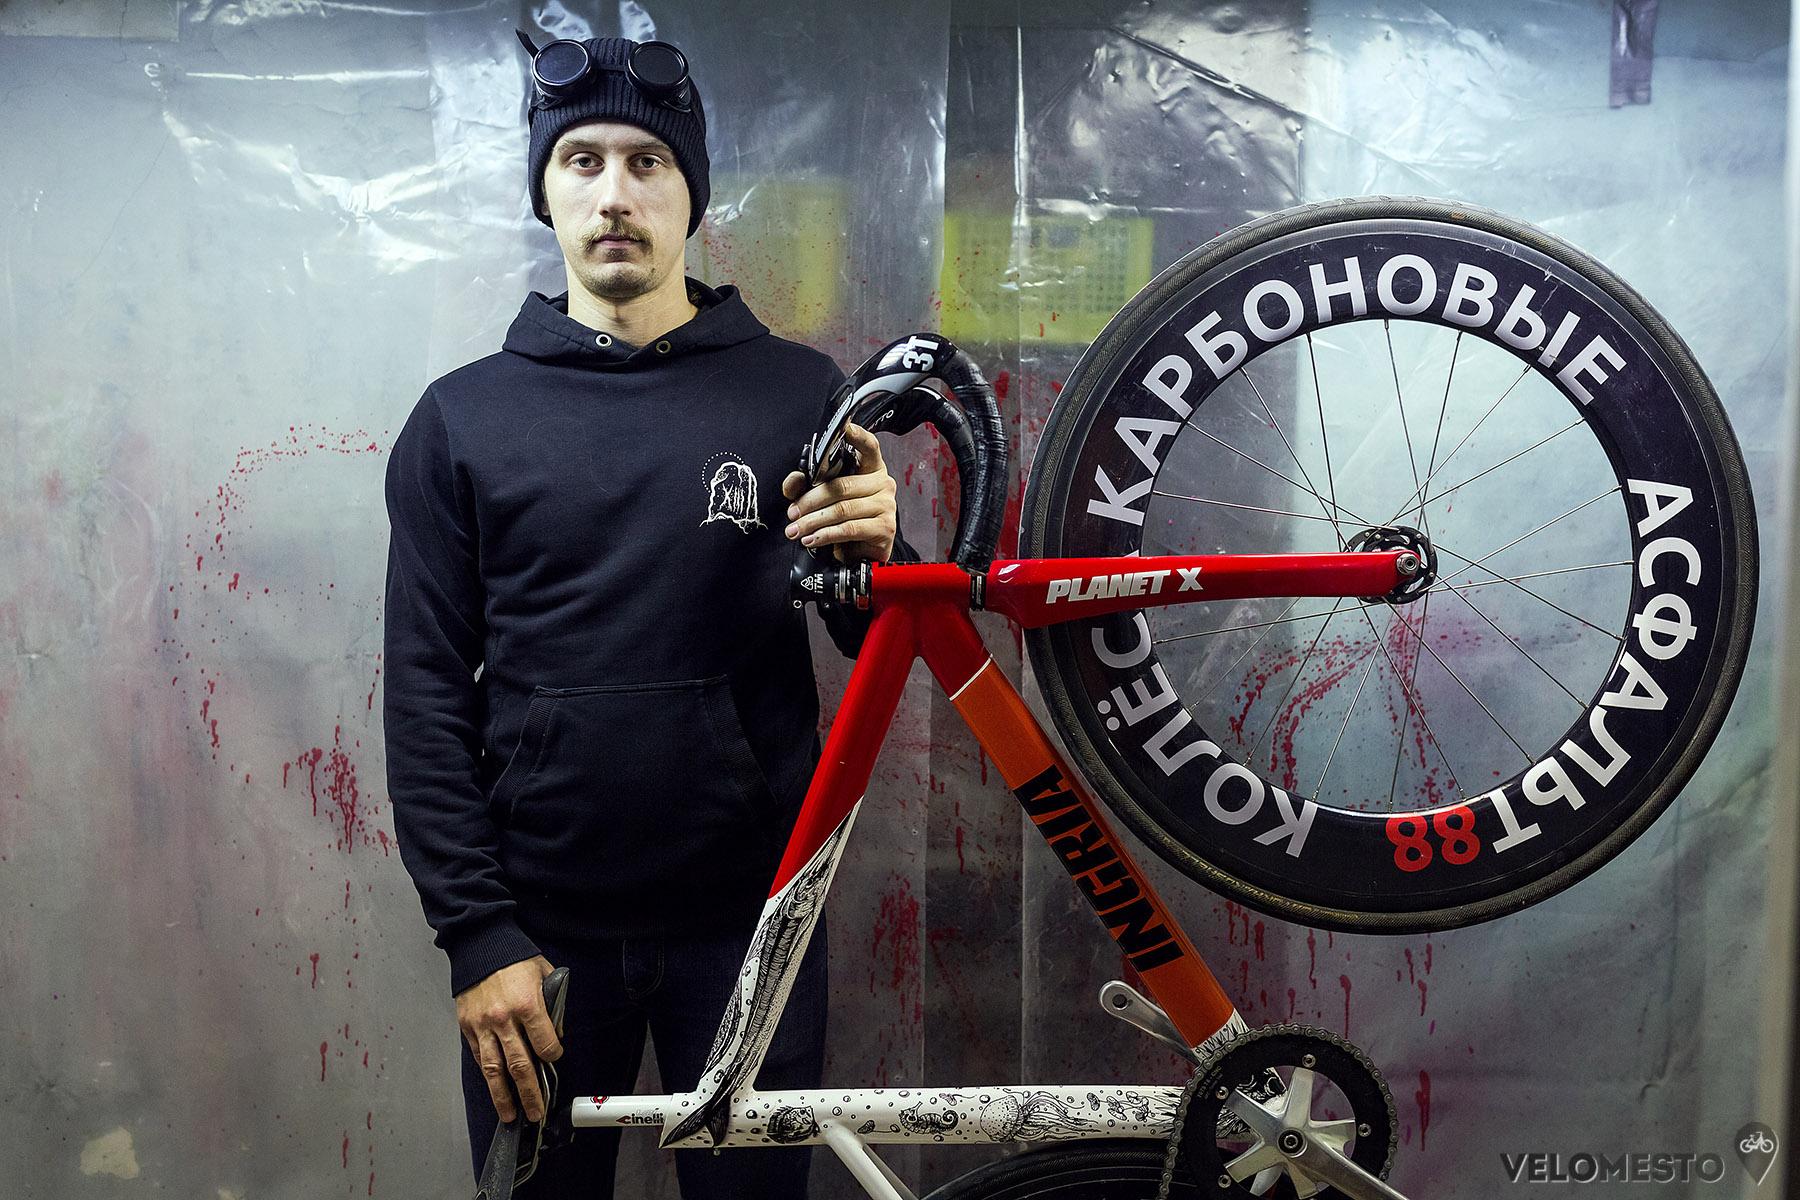 Fixed gear ingria велосипед Александра Привальнева